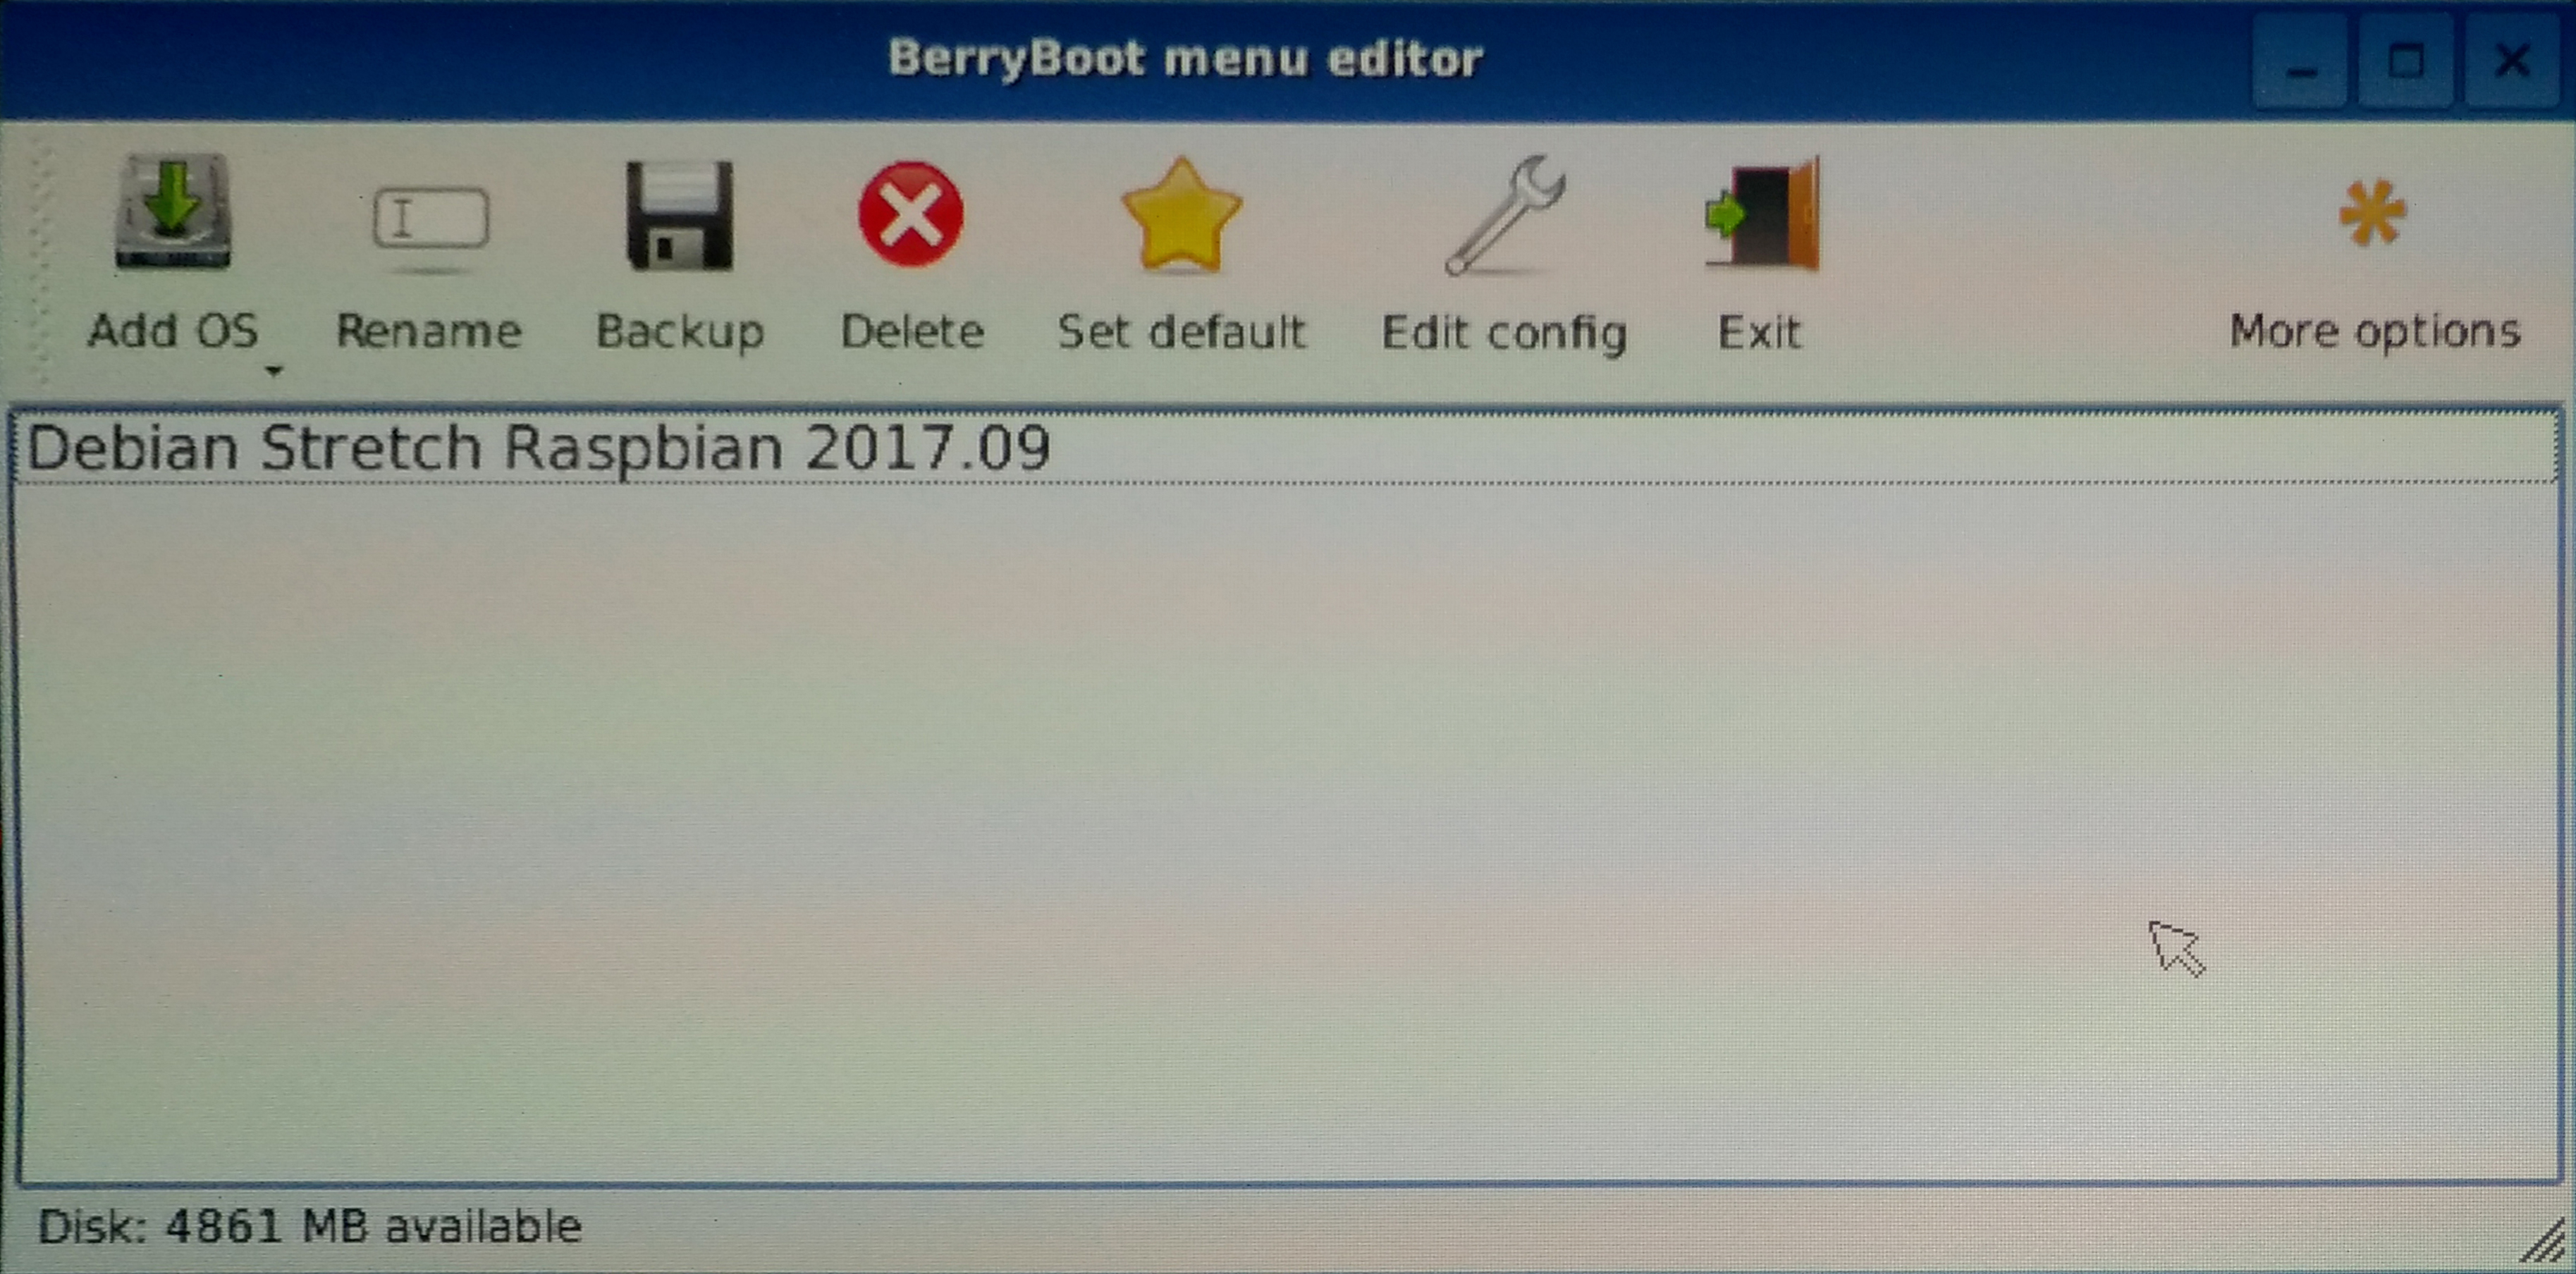 Schermata di configurazione di BerryBoot